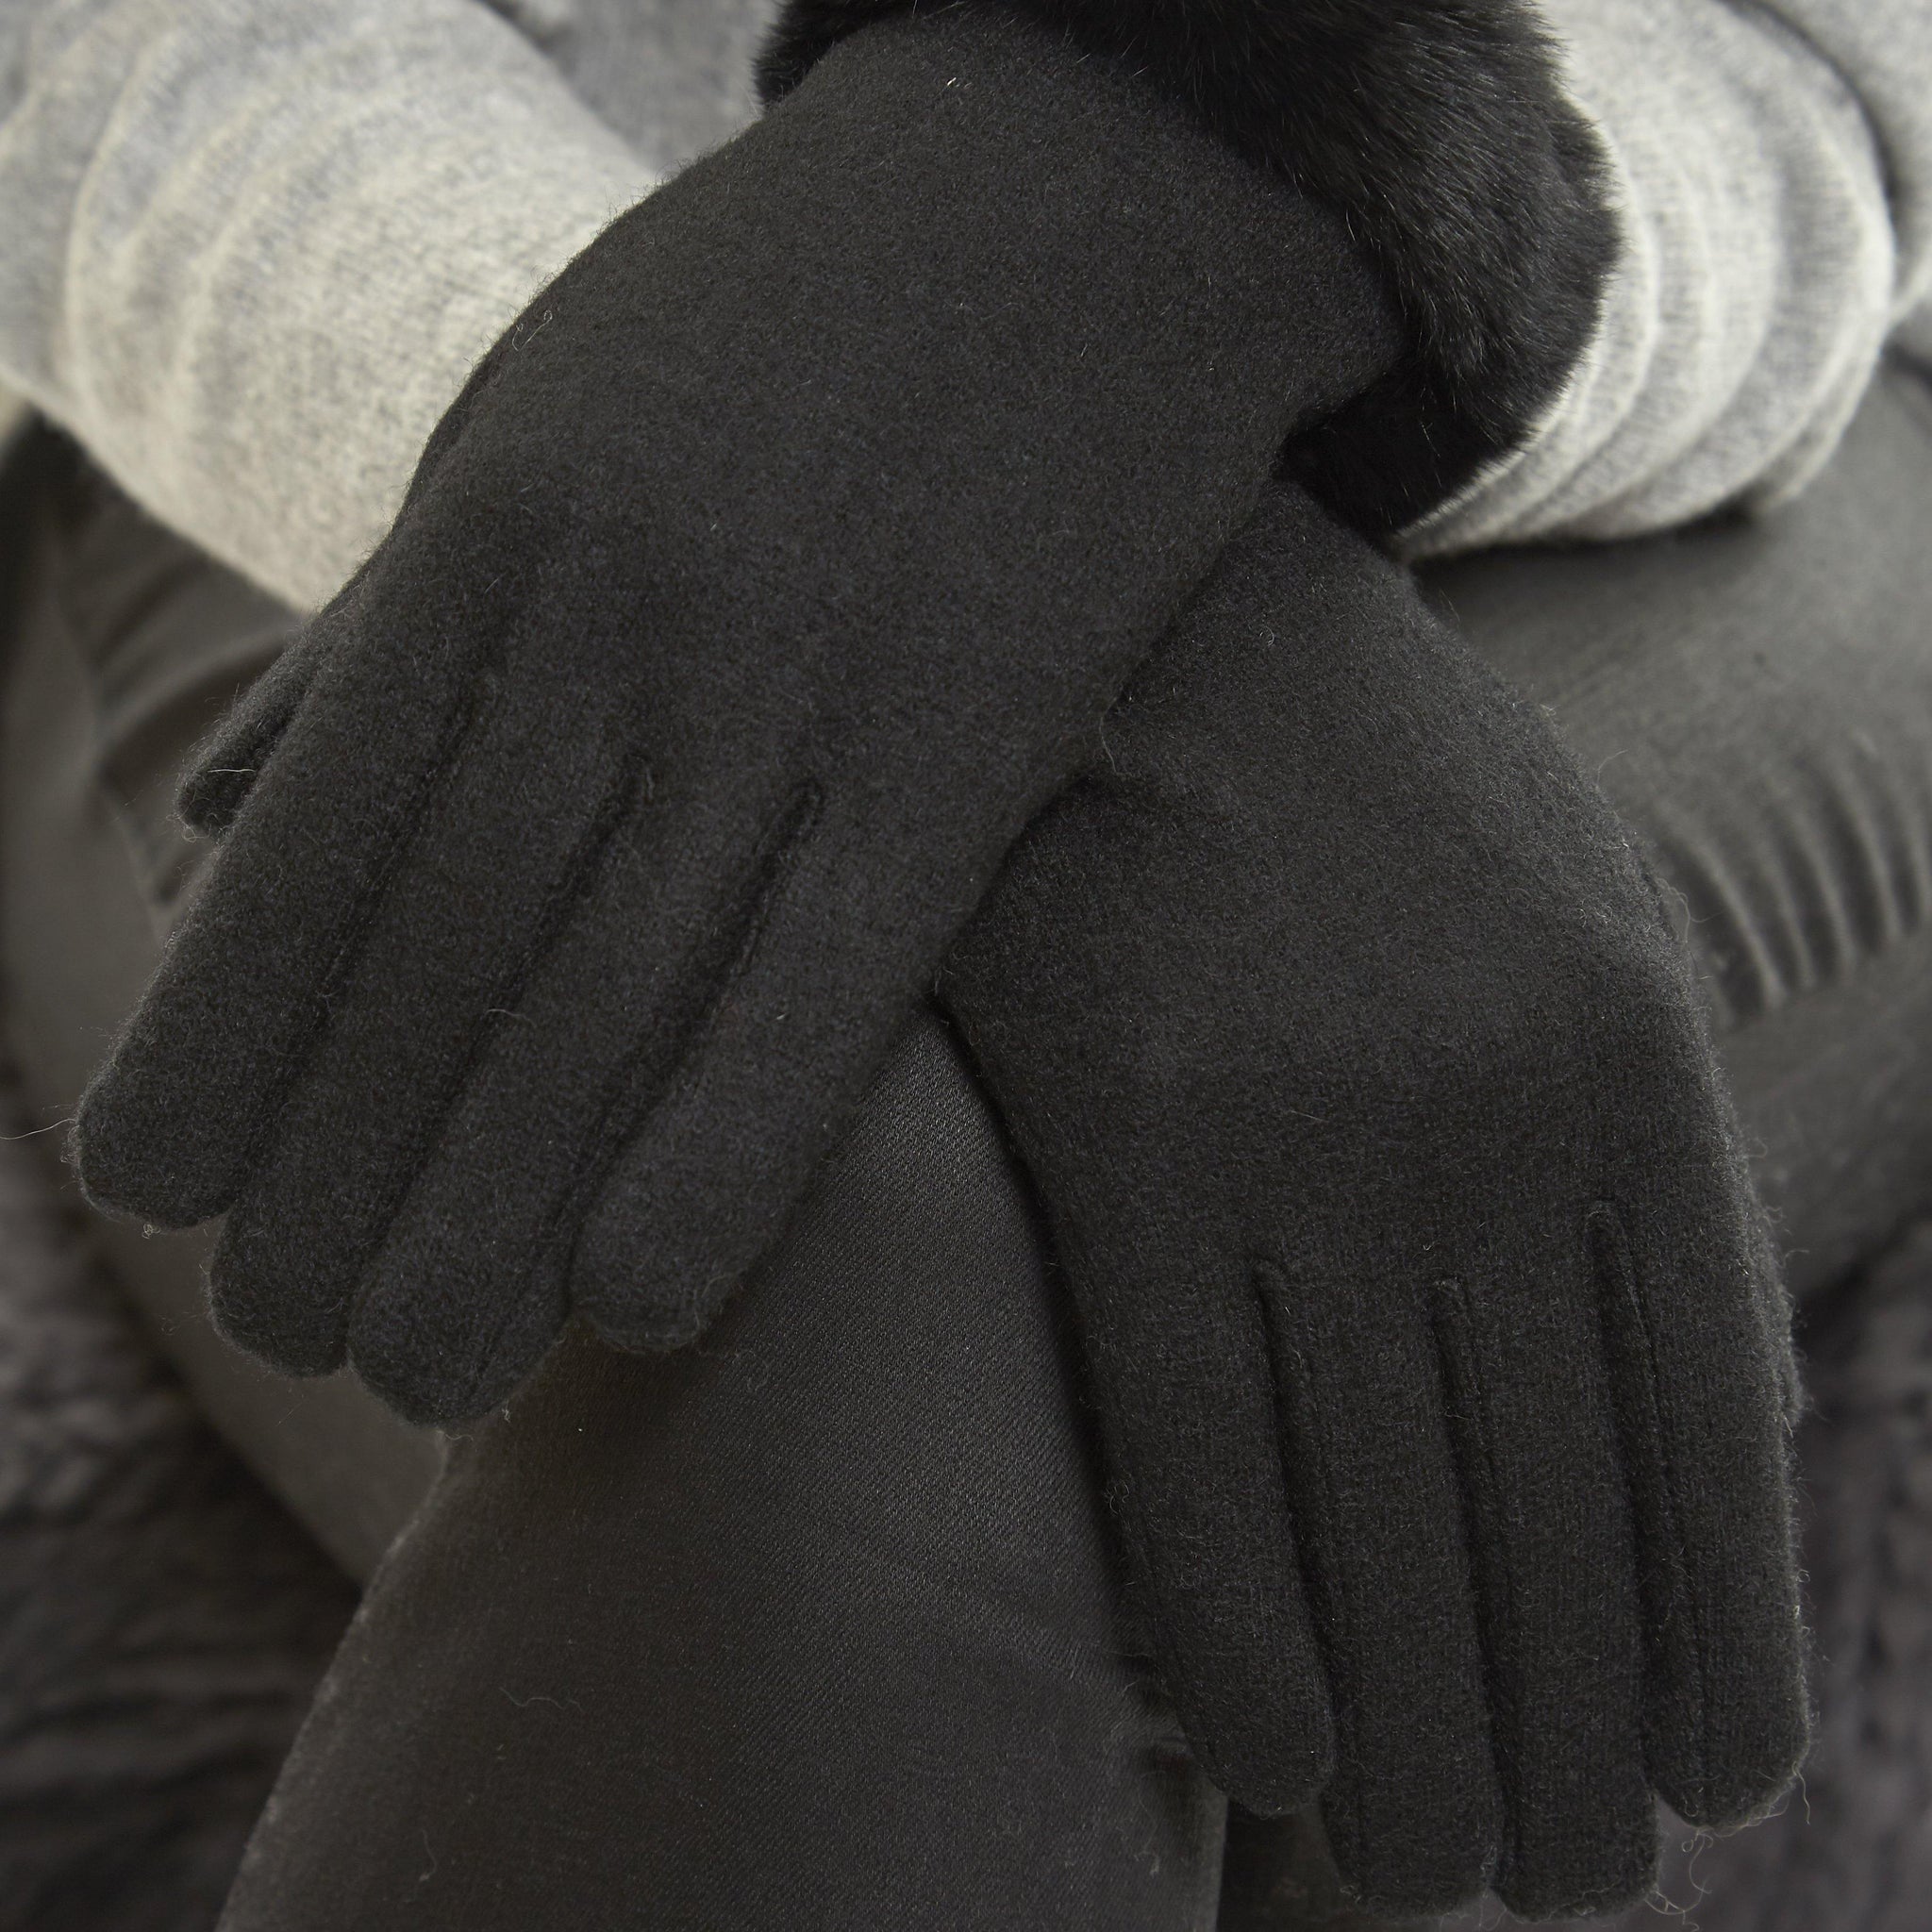 Black Gloves With Black Rex Rabbit Fur Trim - Jessimara